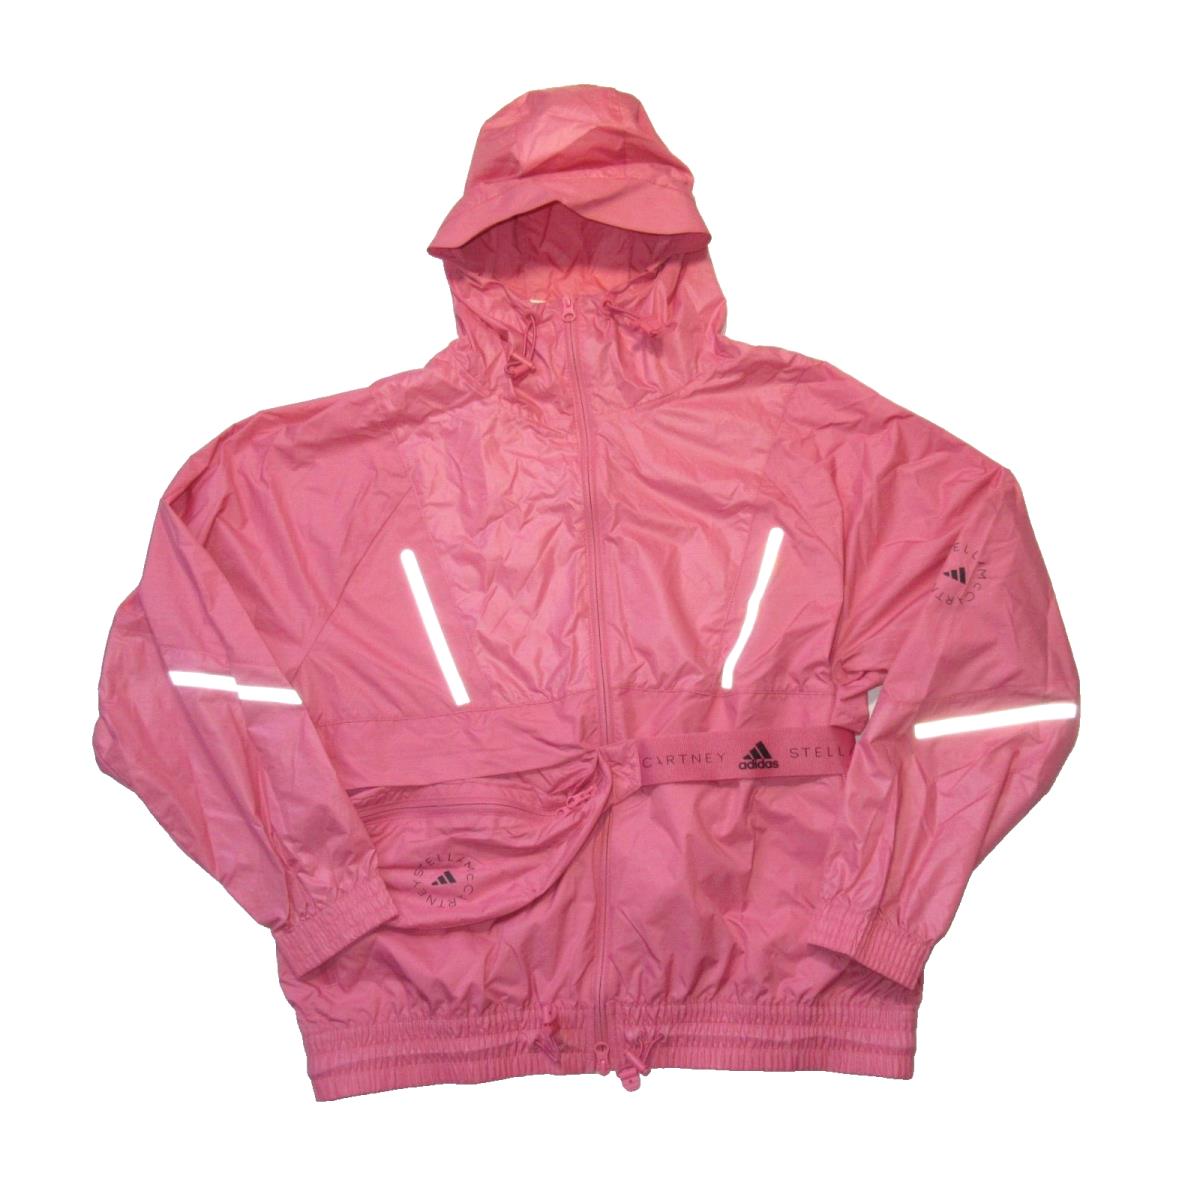 Adidas x Stella Mccartney Smc Windbreaker in Rose Pink Belt Bag Jacket S